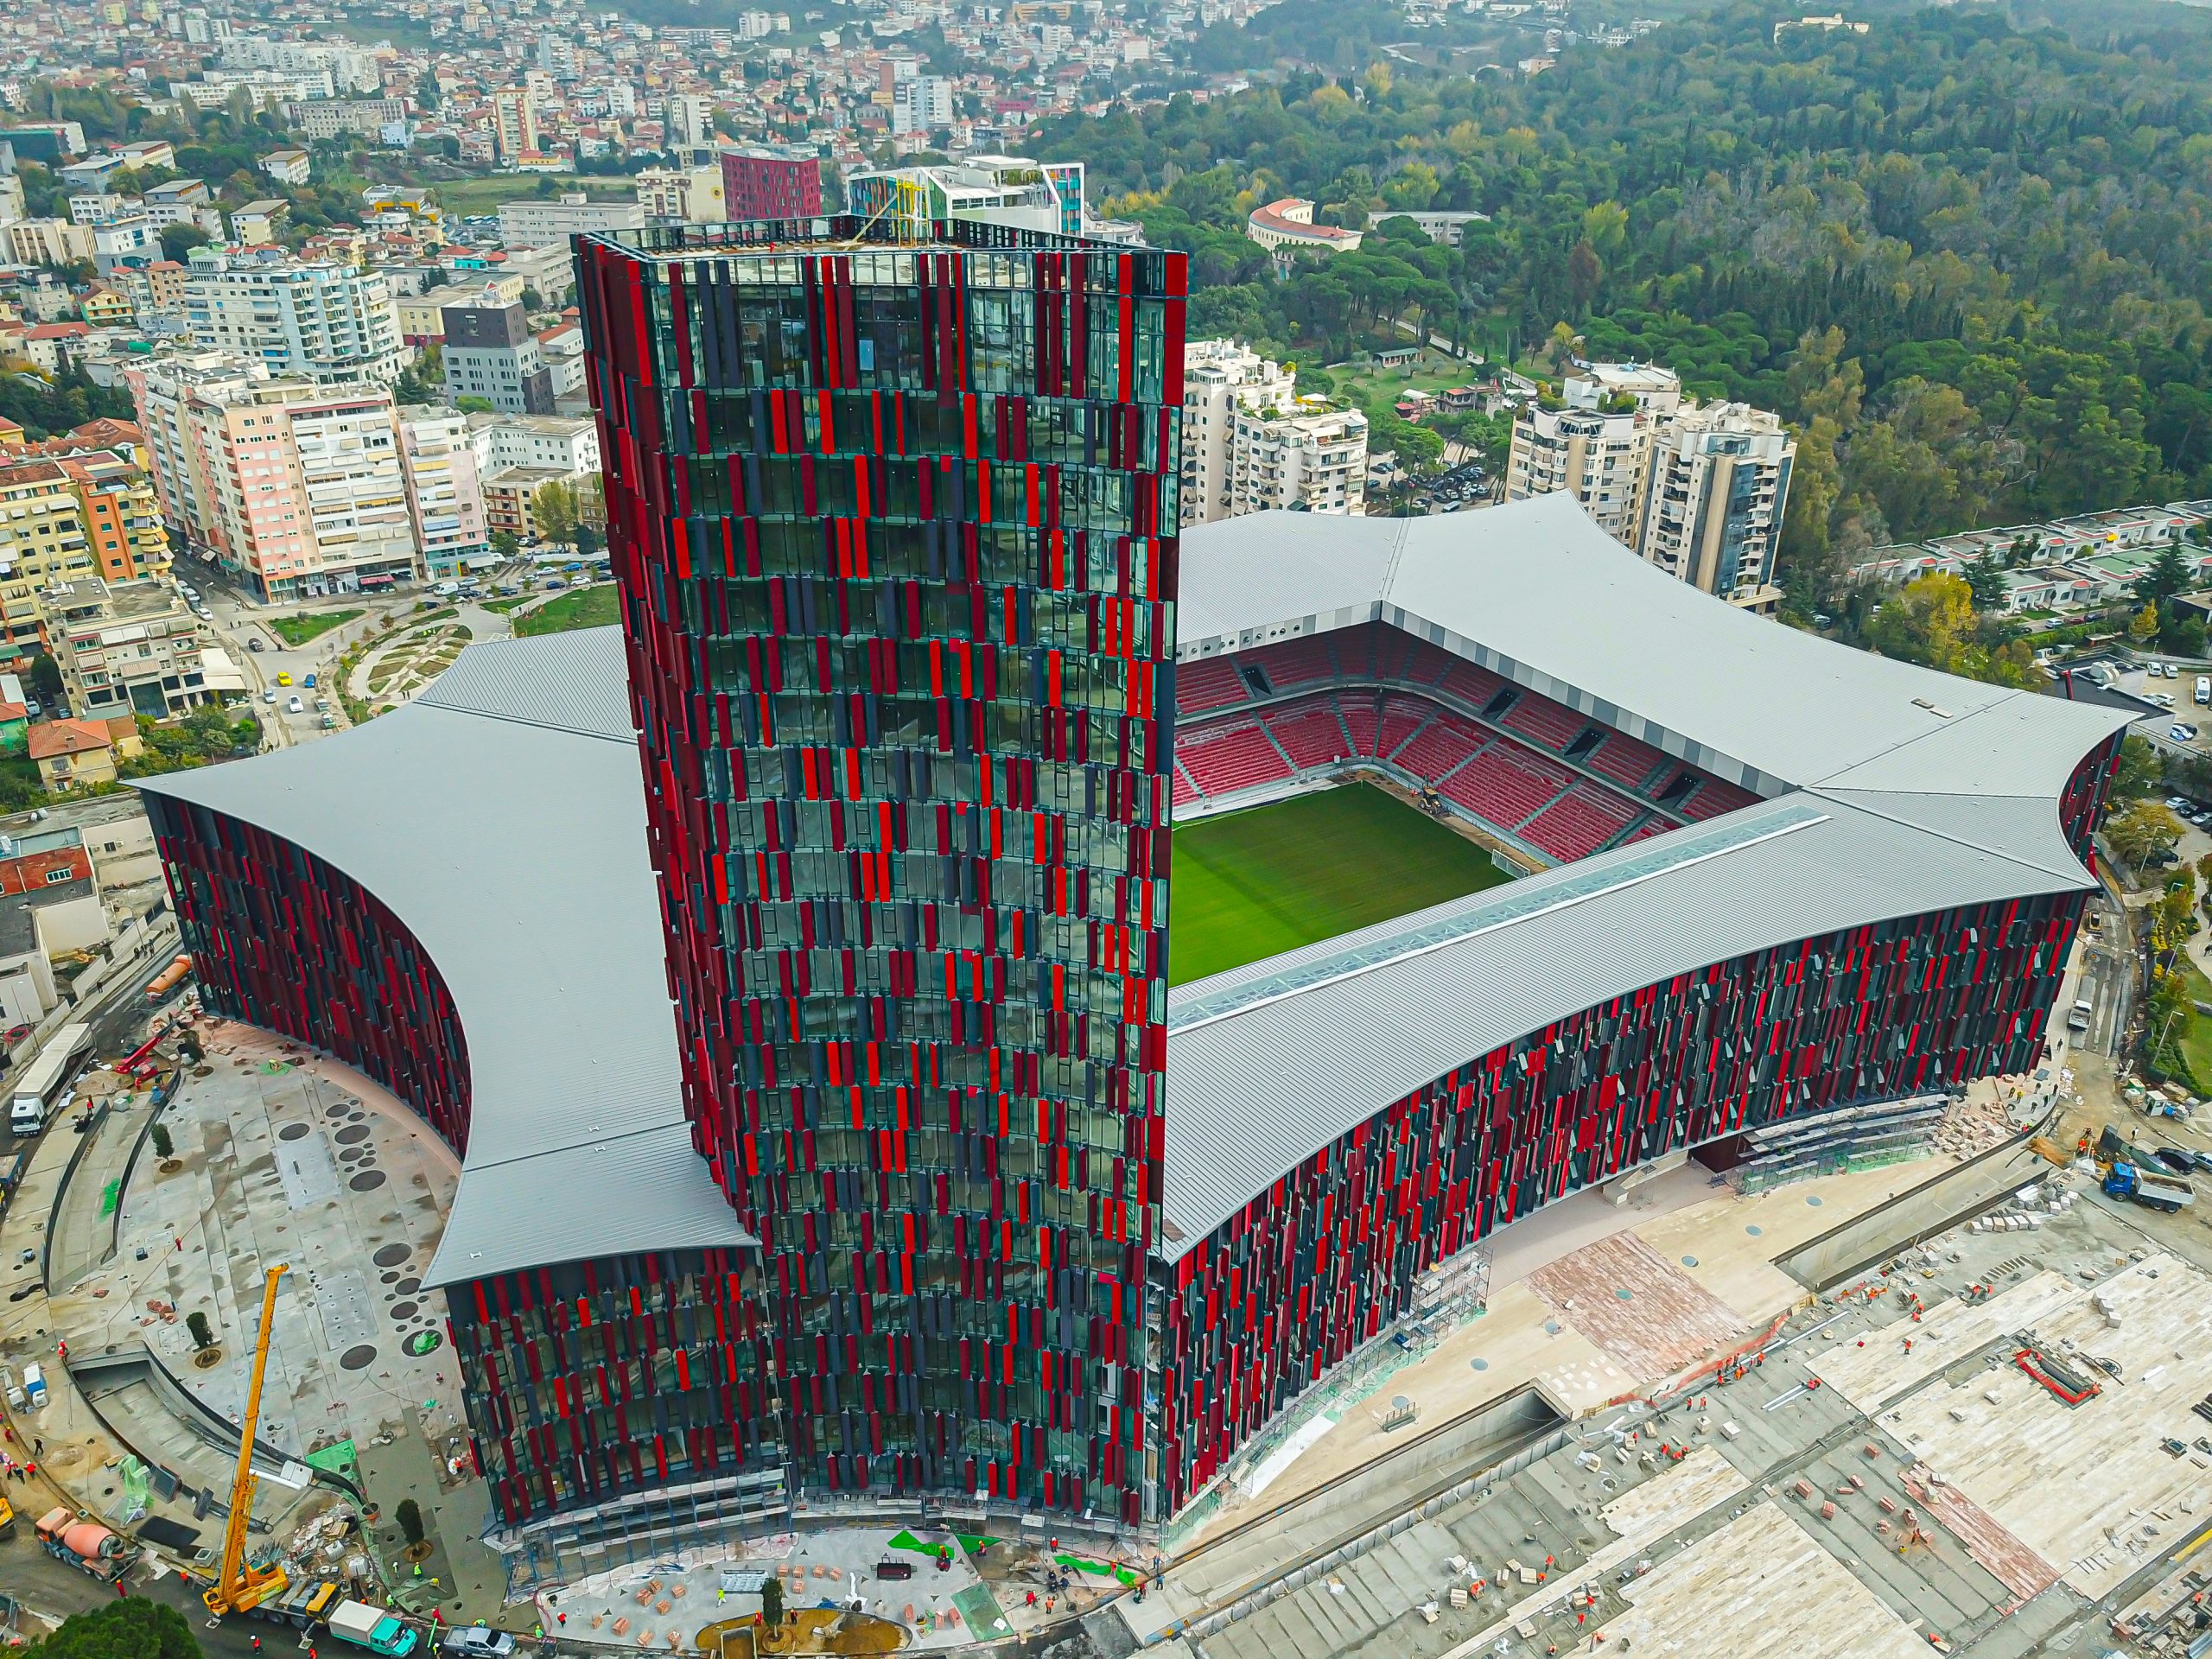 Stadiumi-Air-Albania-scaled.jpg